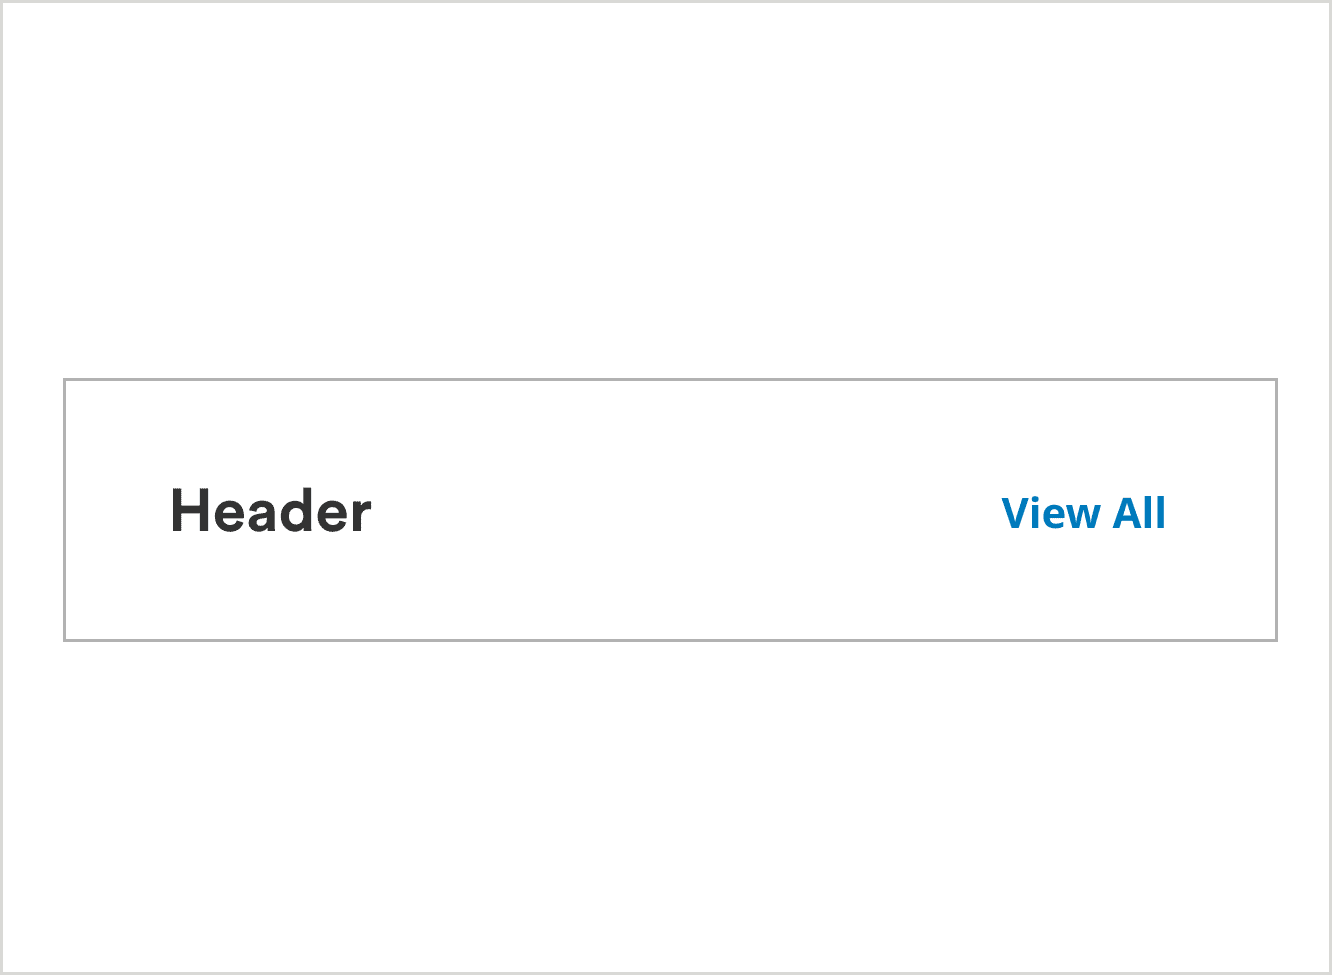 Header - Description and Link